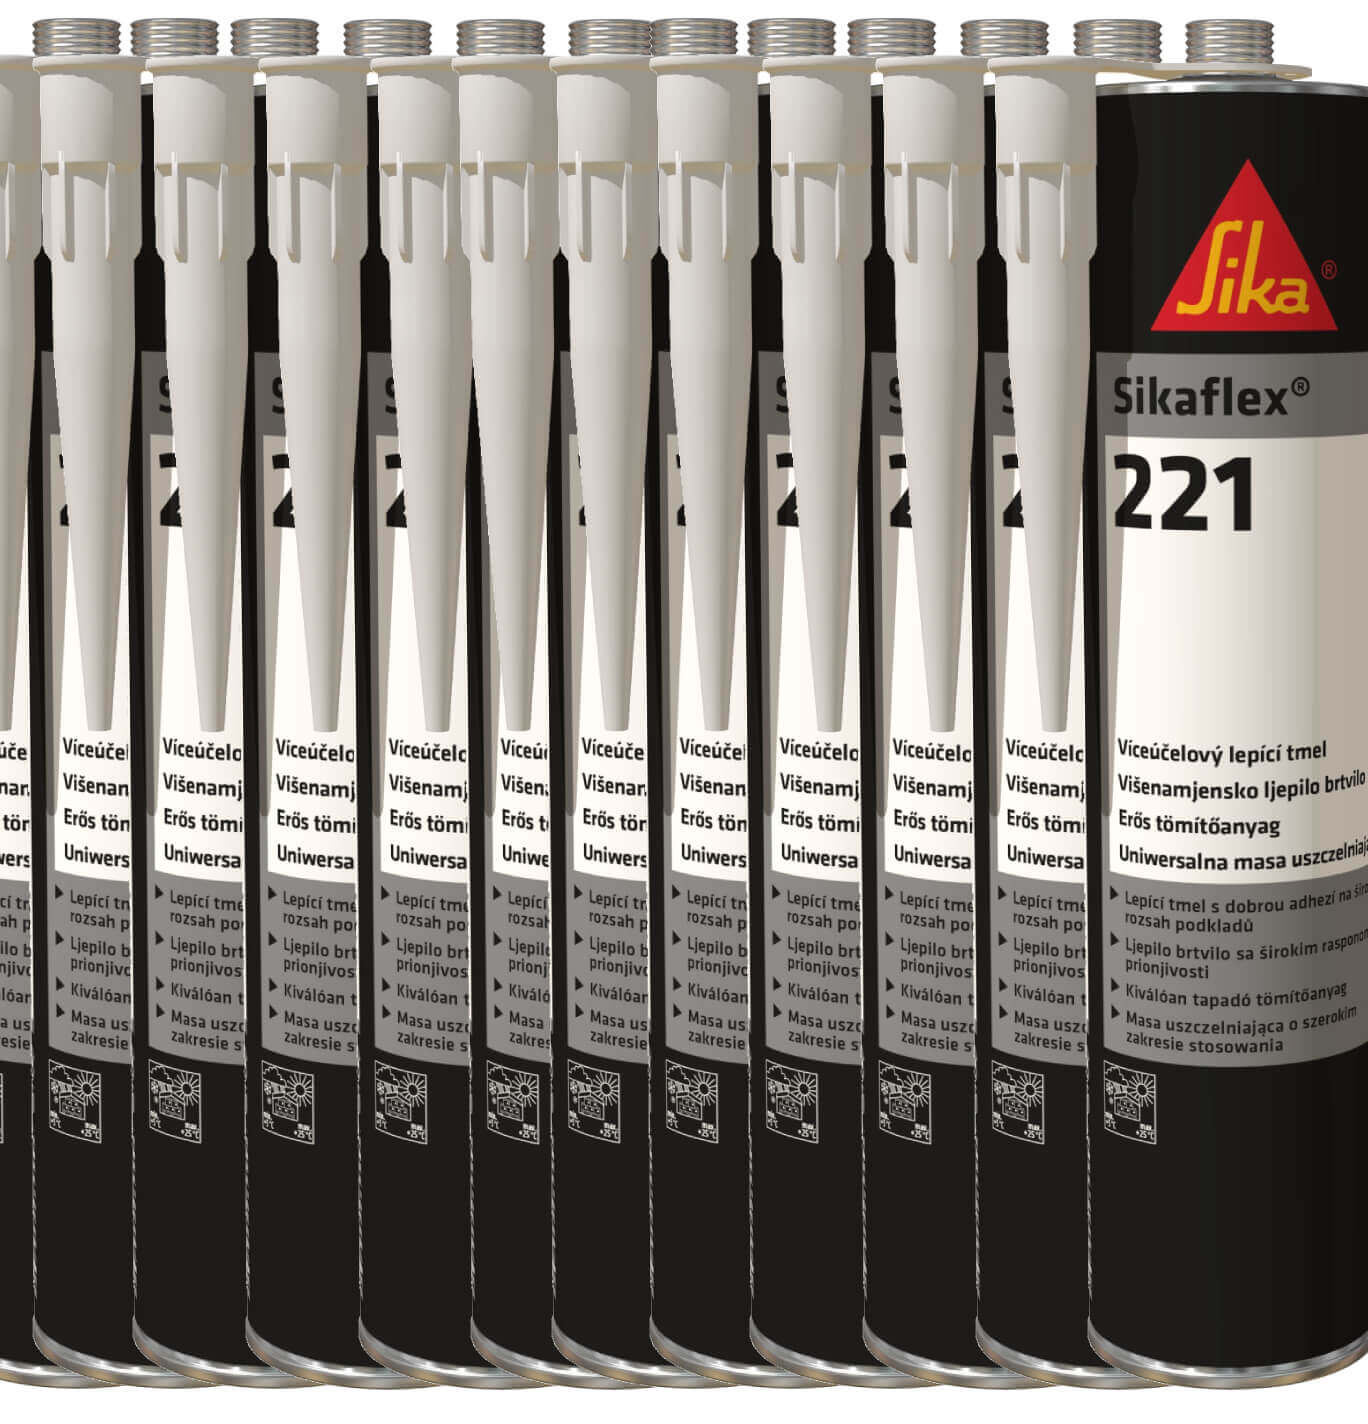 12 x Sikaflex 221 Brown Multi Purpose Adhesive Sealant Bundle Image